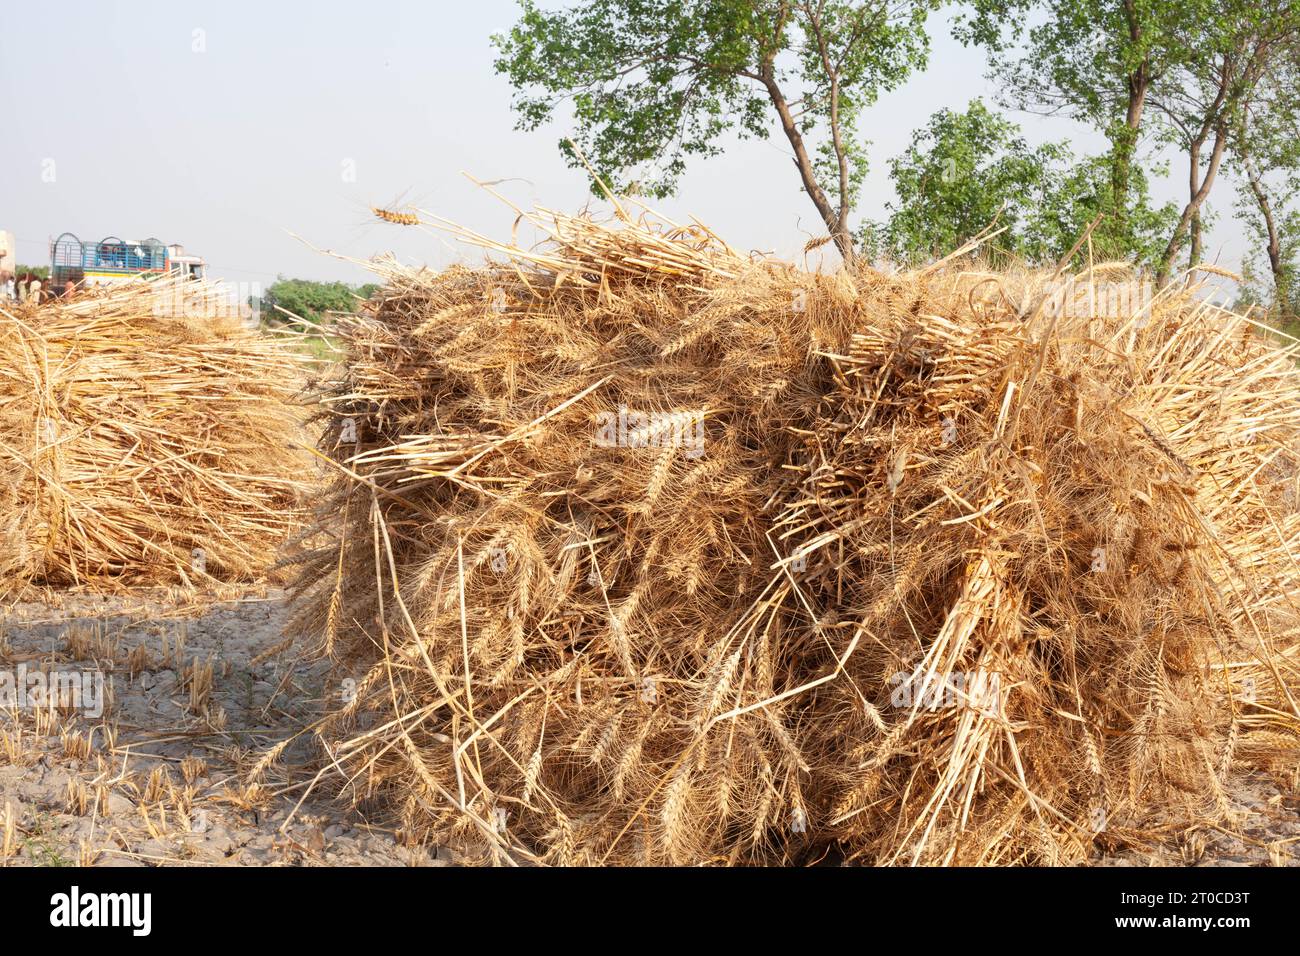 Golden Barley (Wheat) Field during Daylight Stock Photo